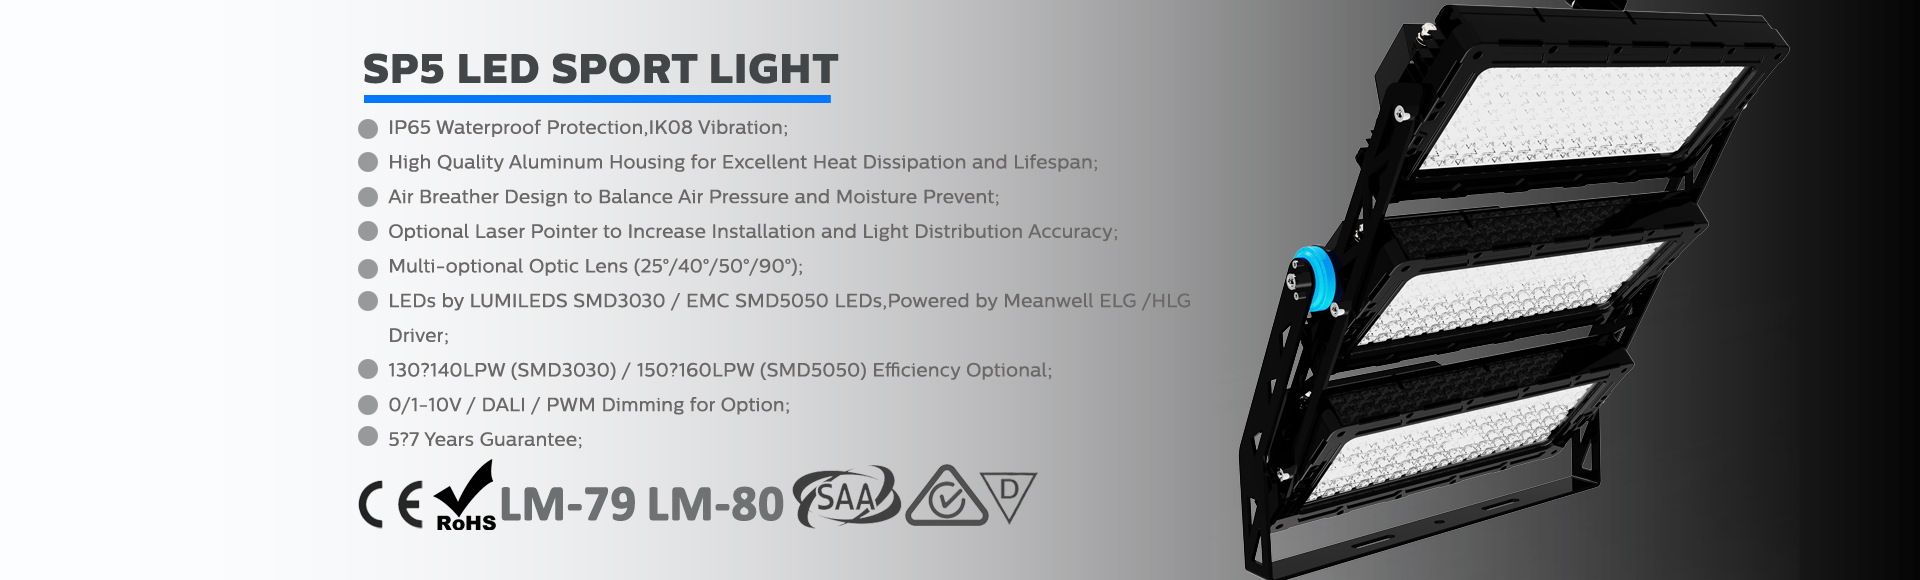 SP5 LED Sport Light